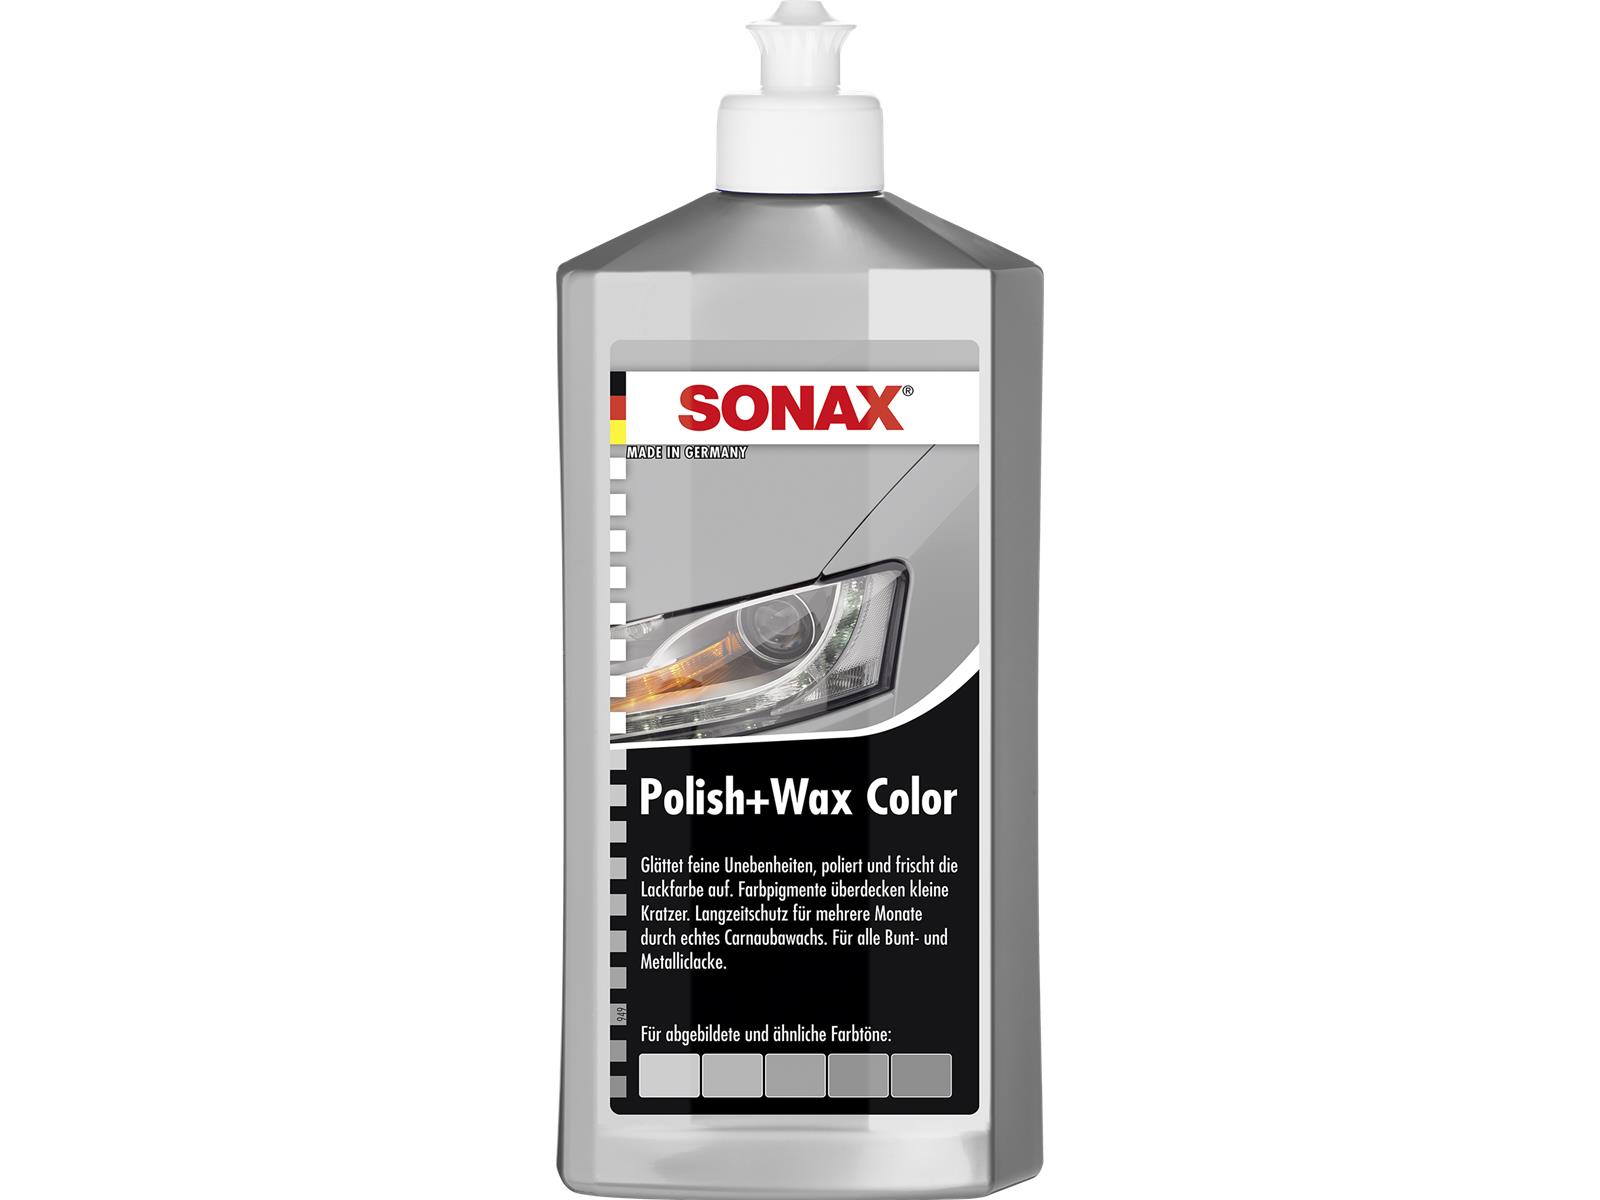 SONAX 02963000 Polish+Wax Color silber/grau 500 ml